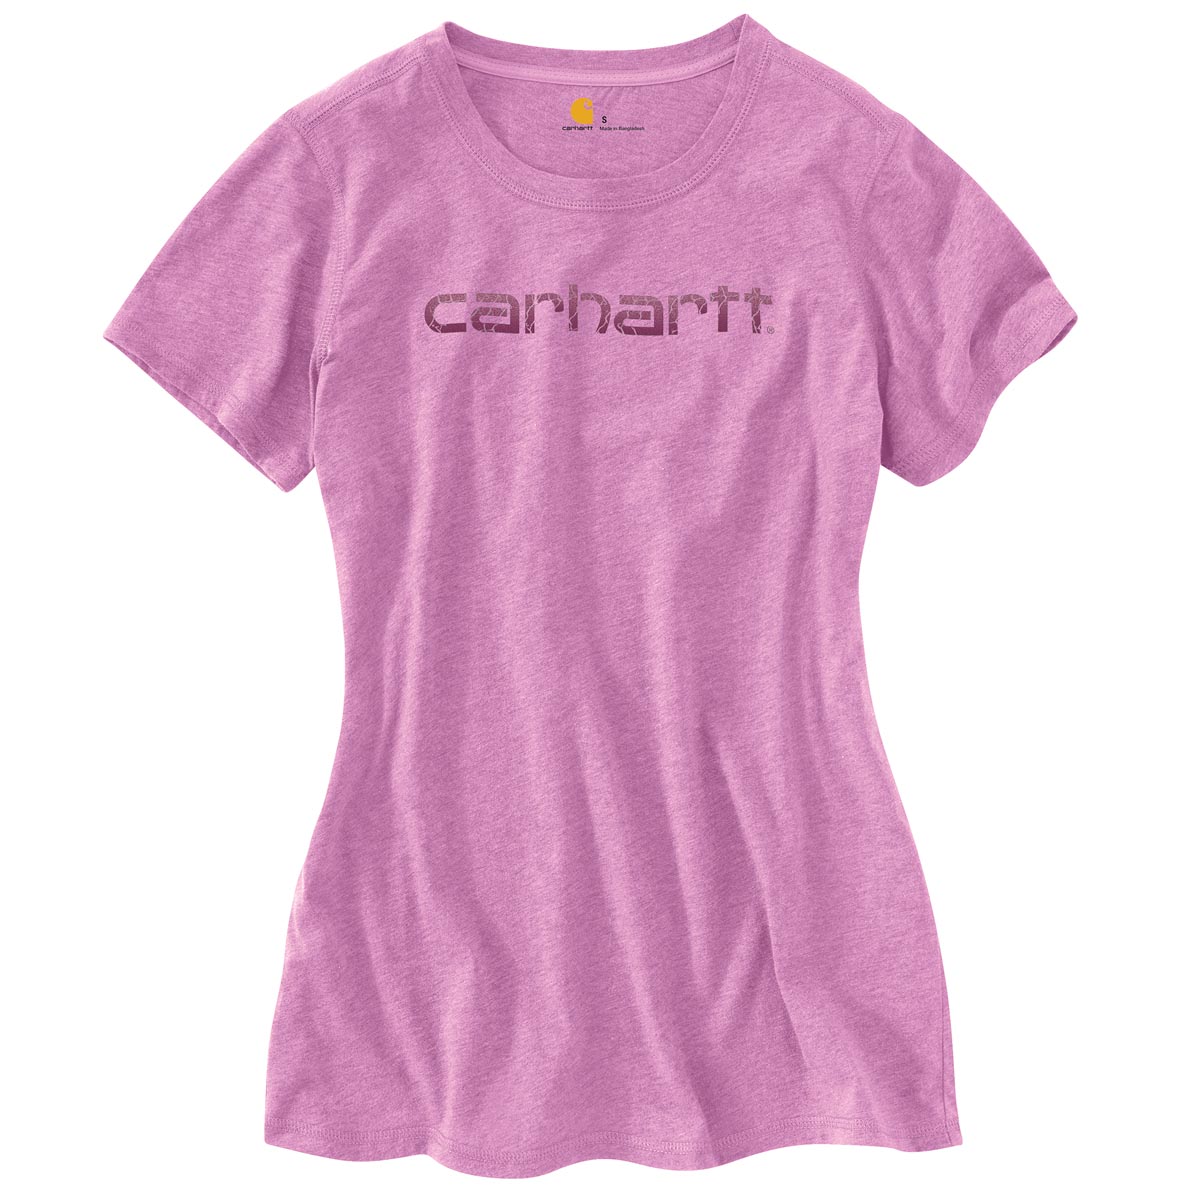 Carhartt Womens Short Sleeve Signature T Shirt